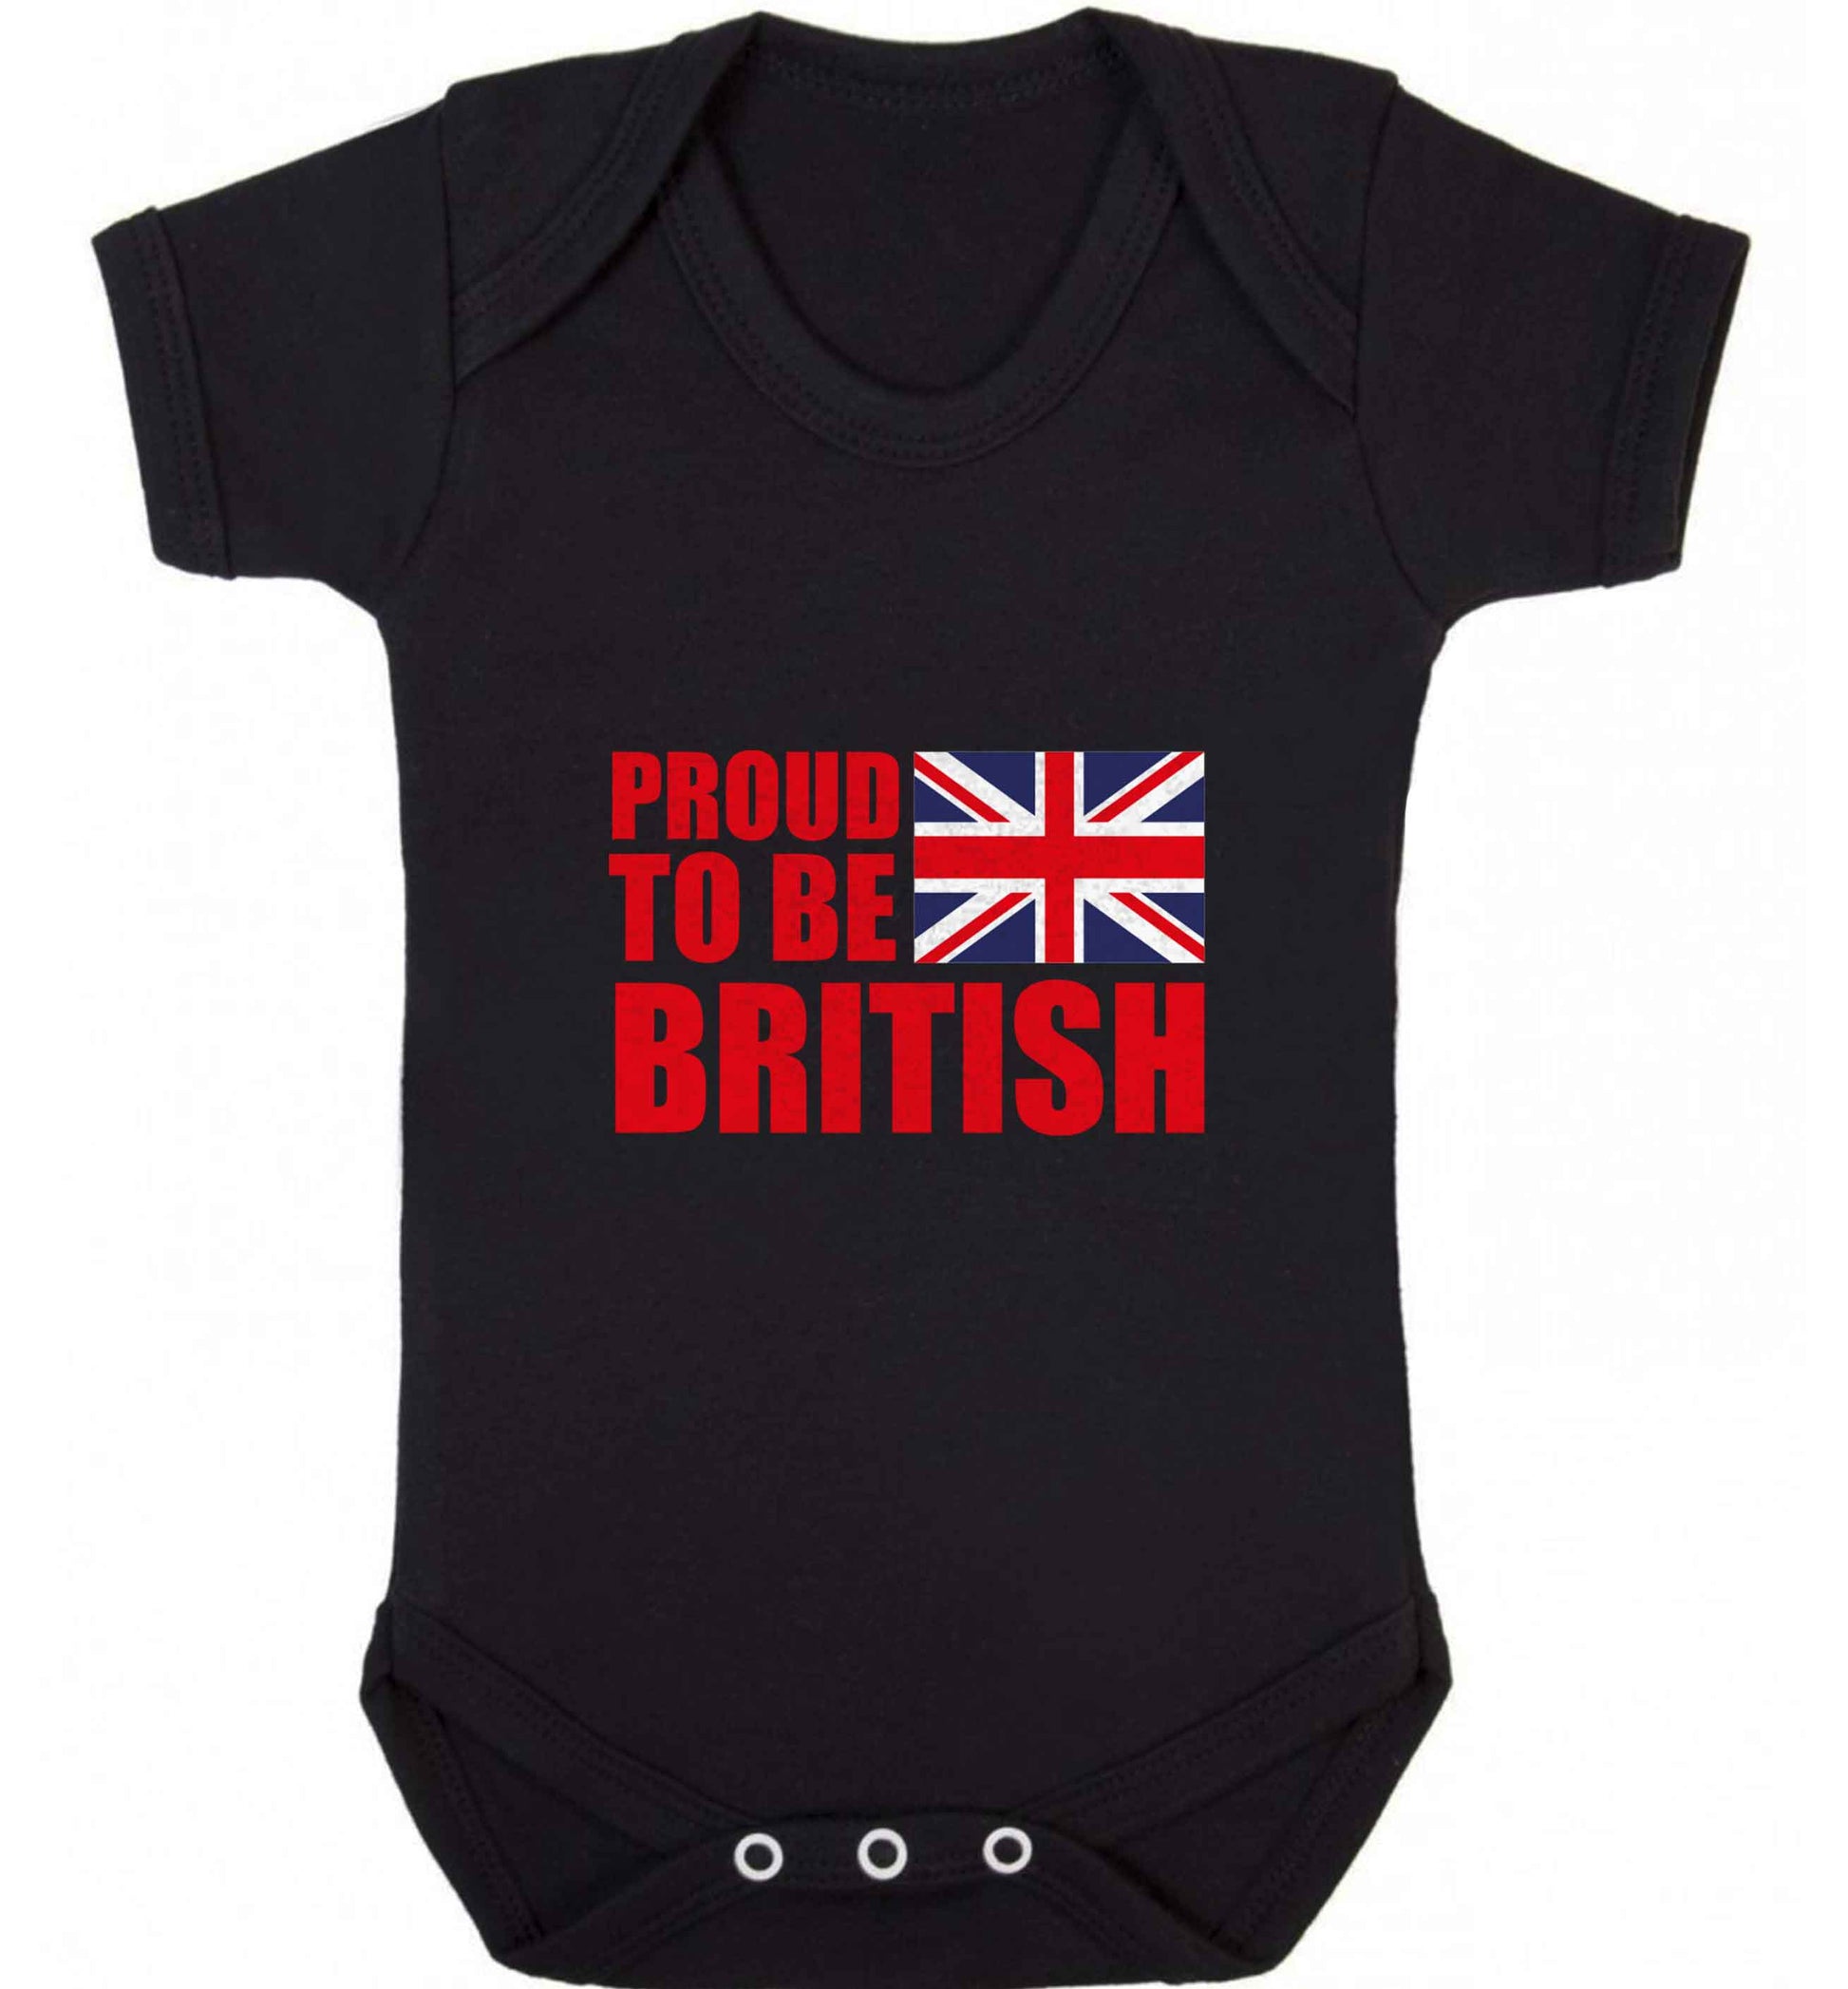 Proud to be British baby vest black 18-24 months